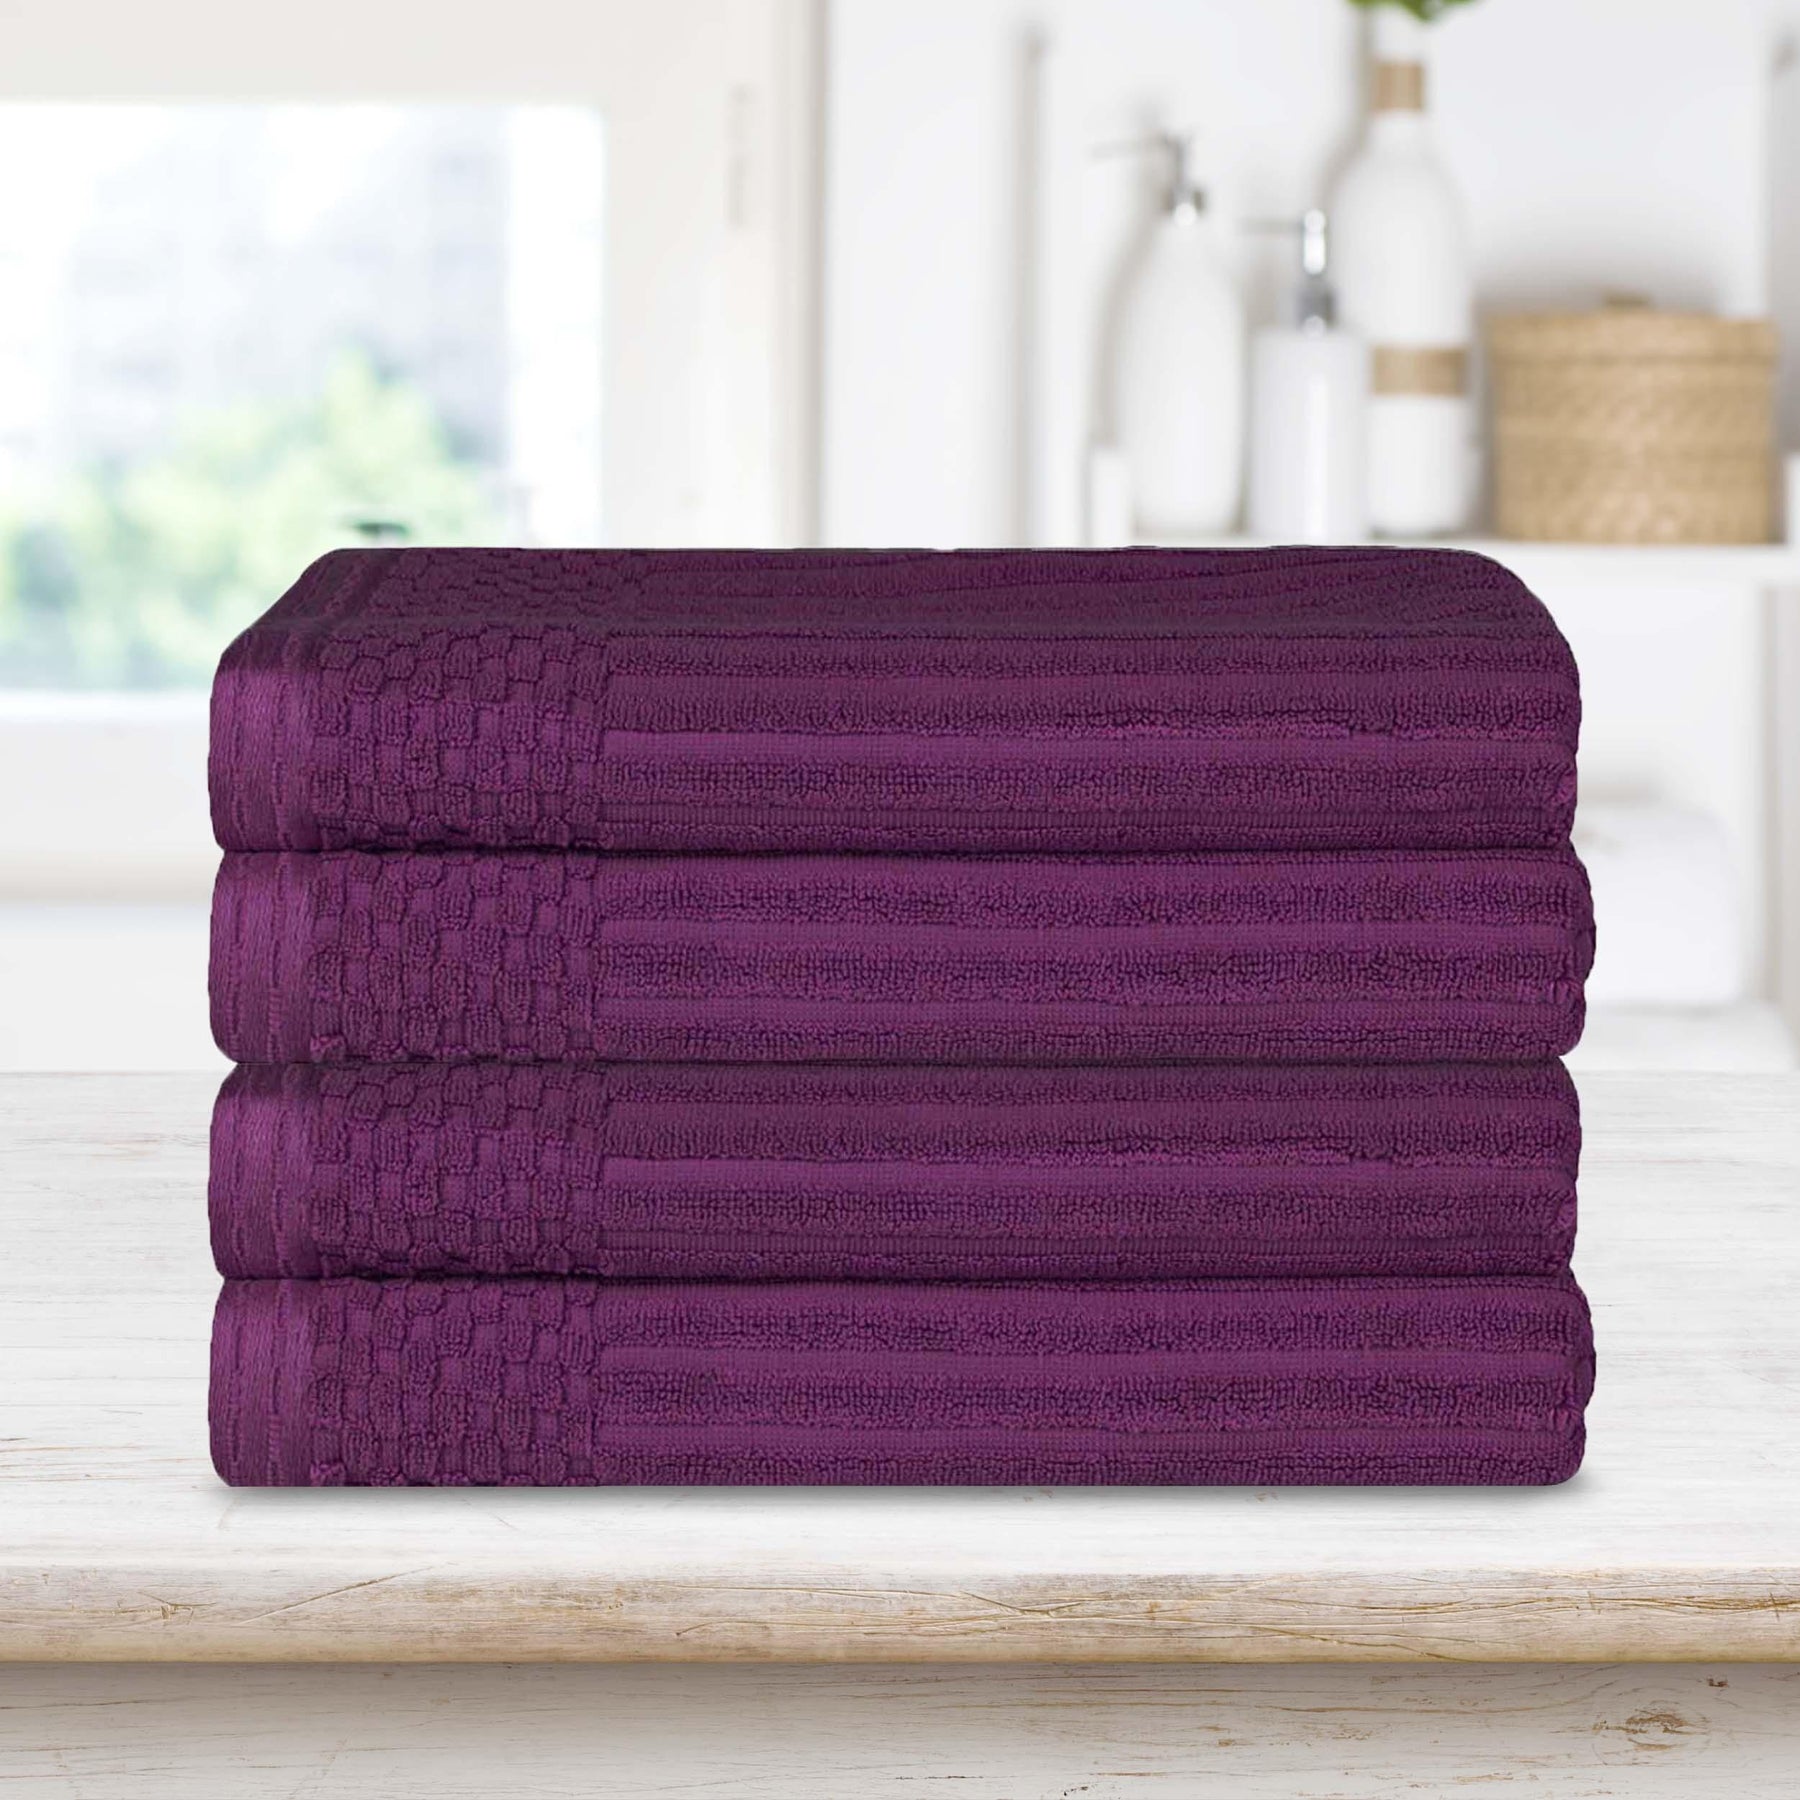  Superior Soho Ribbed Textured Cotton Ultra-Absorbent Bath Sheet & Bath Towel Set - Plum